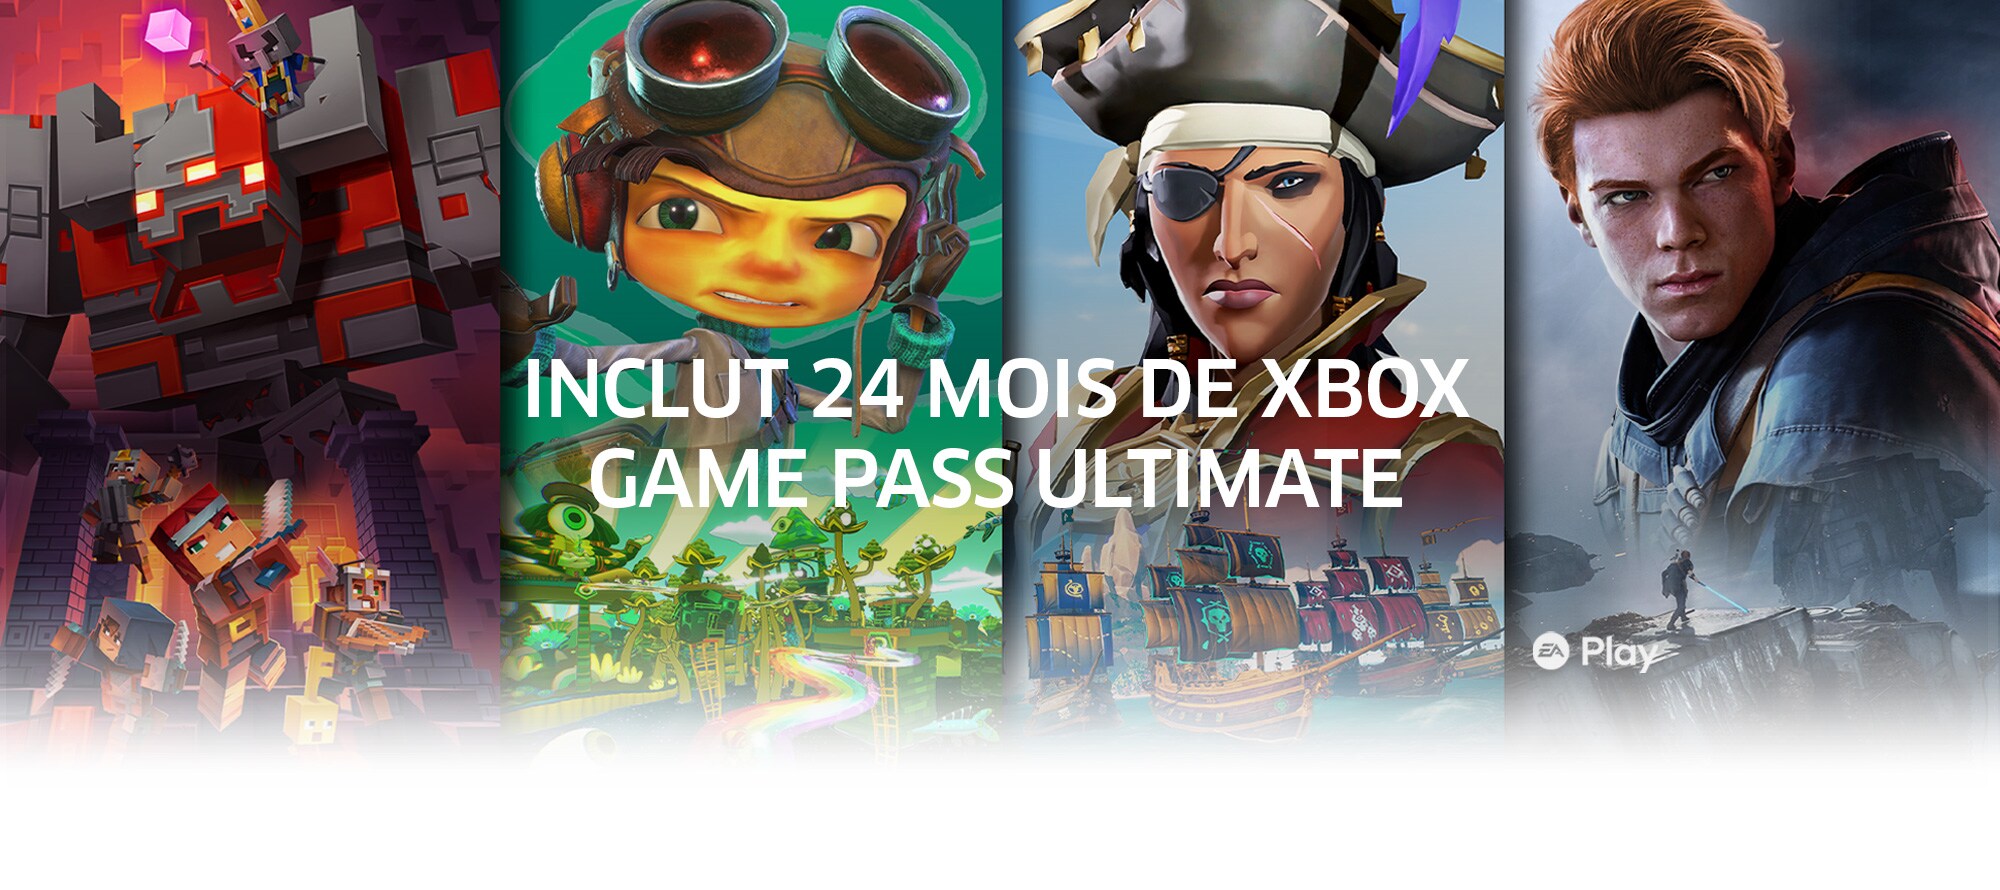 INCLUT 24 MOIS DE XBOX GAME PASS ULTIMATE